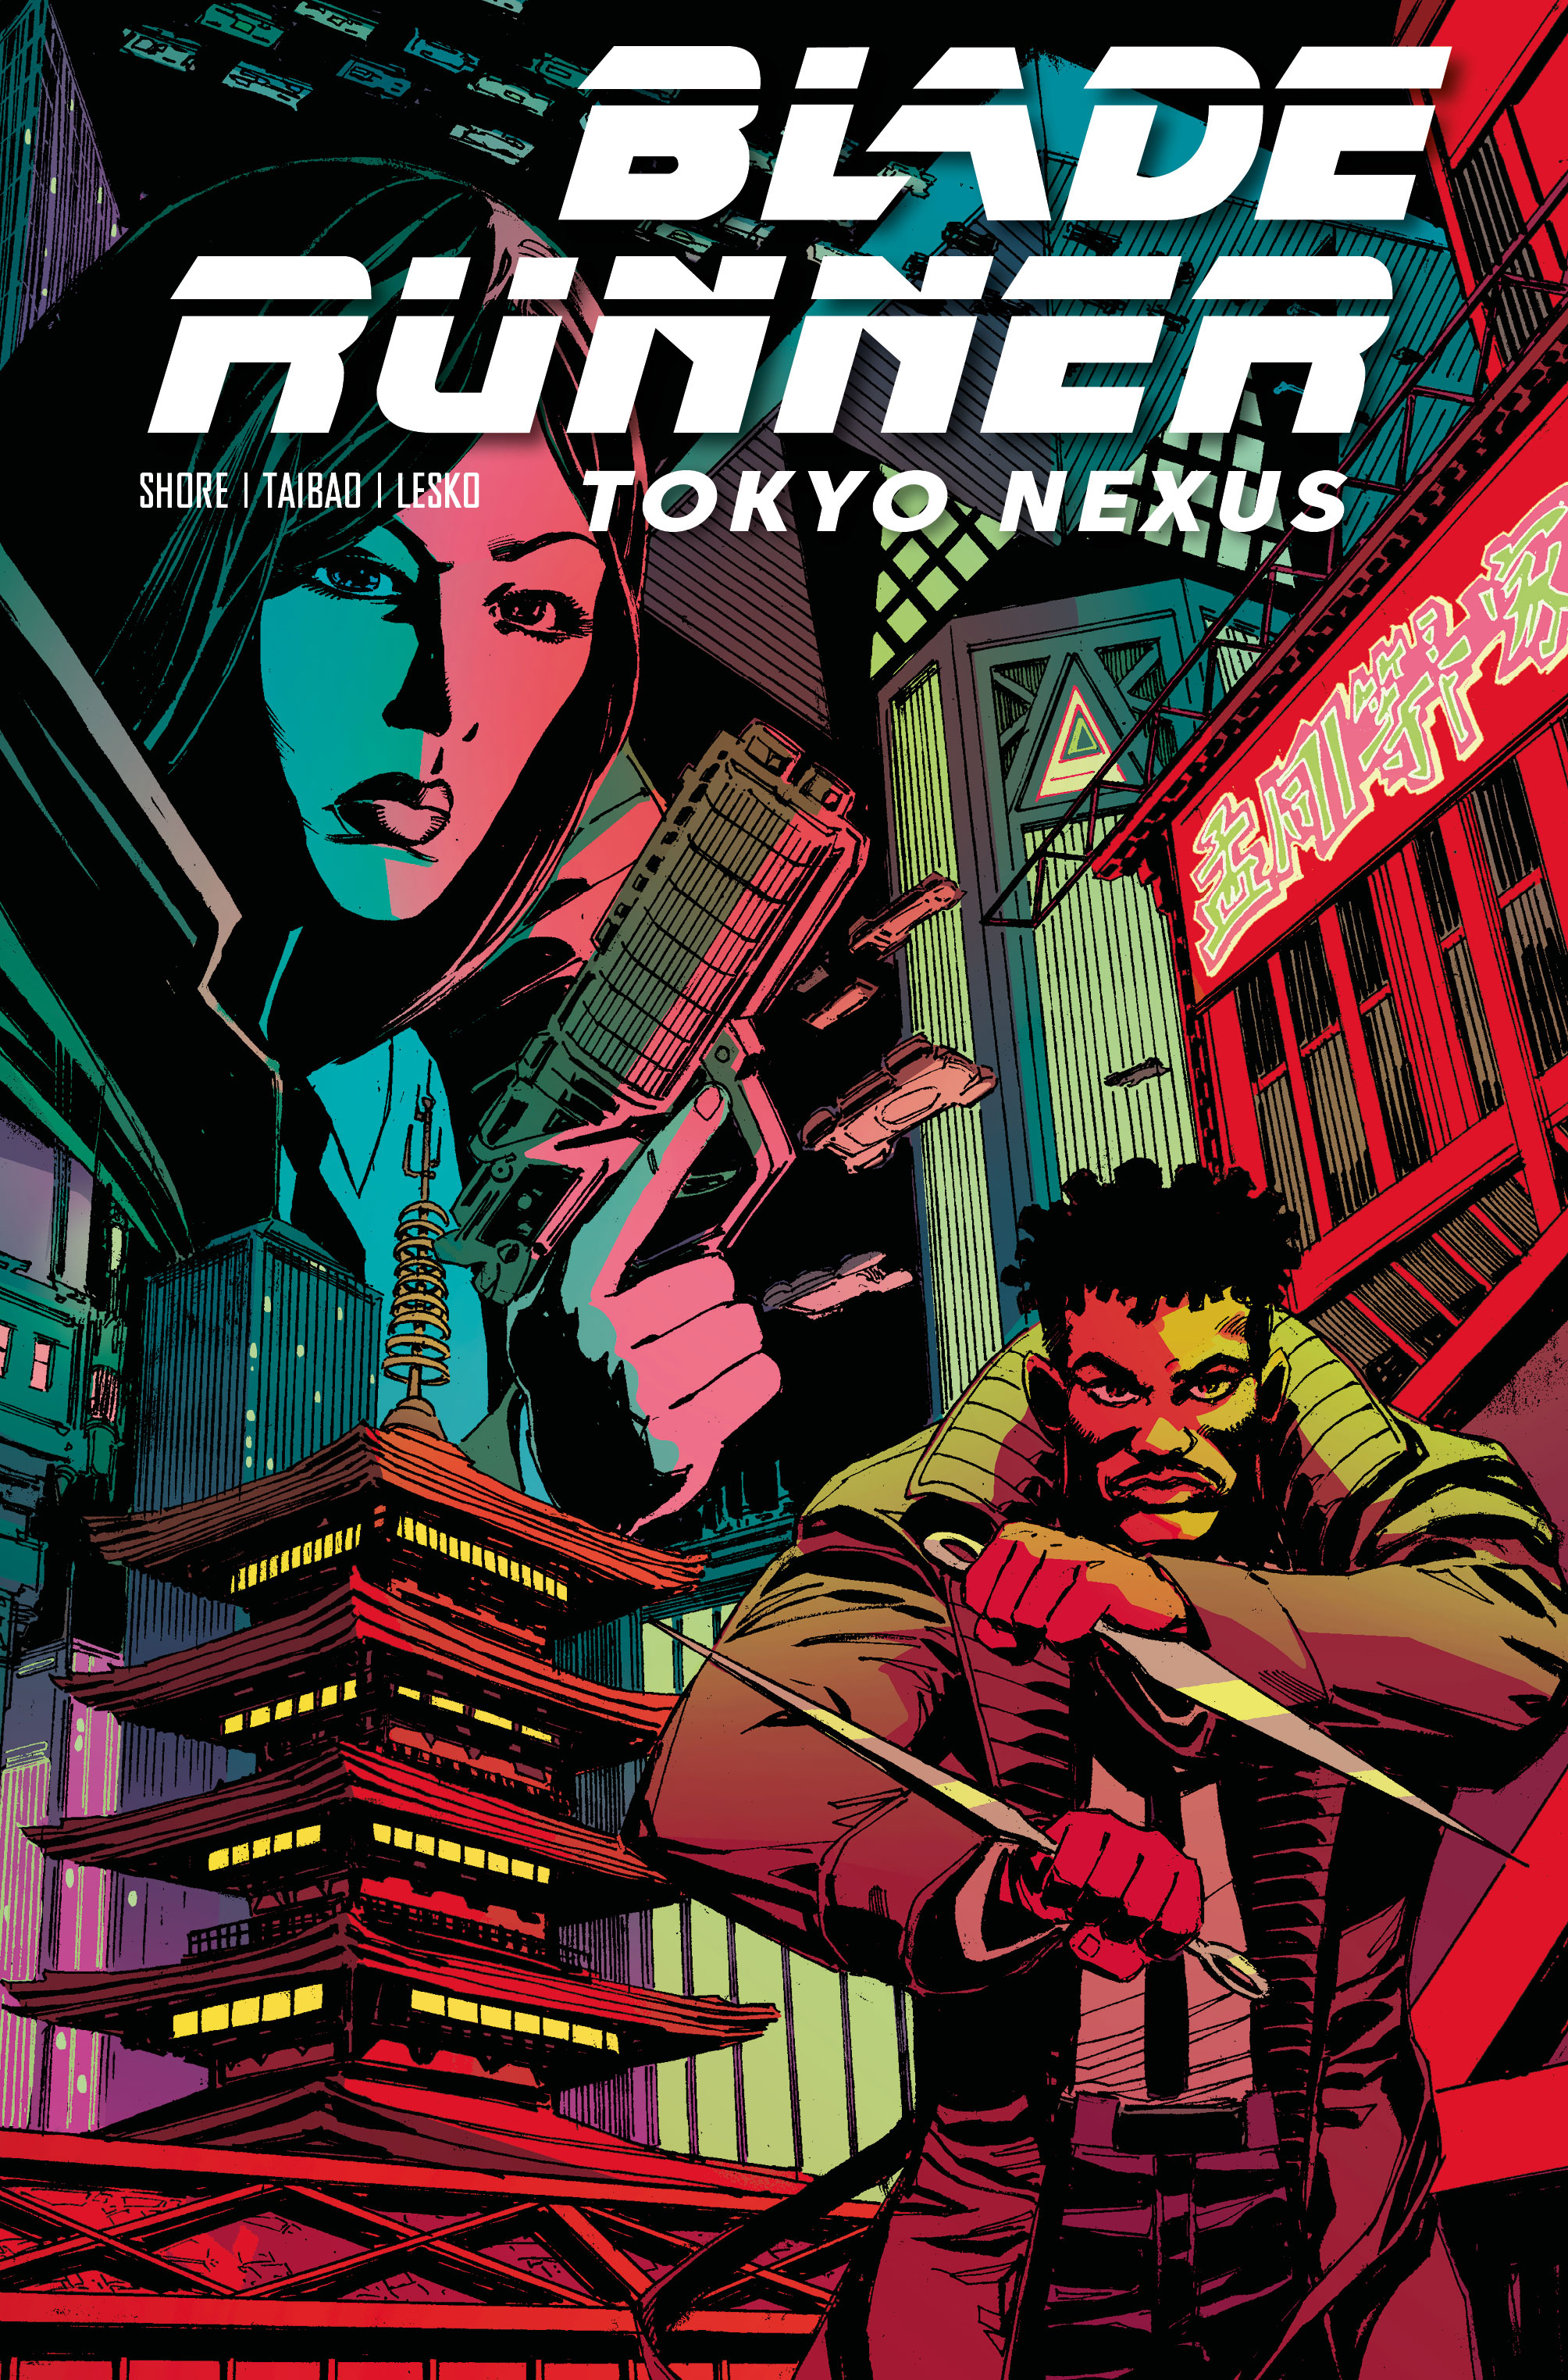 Exclusive Blade Runner Tokyo Nexus #2 Covers Reveal